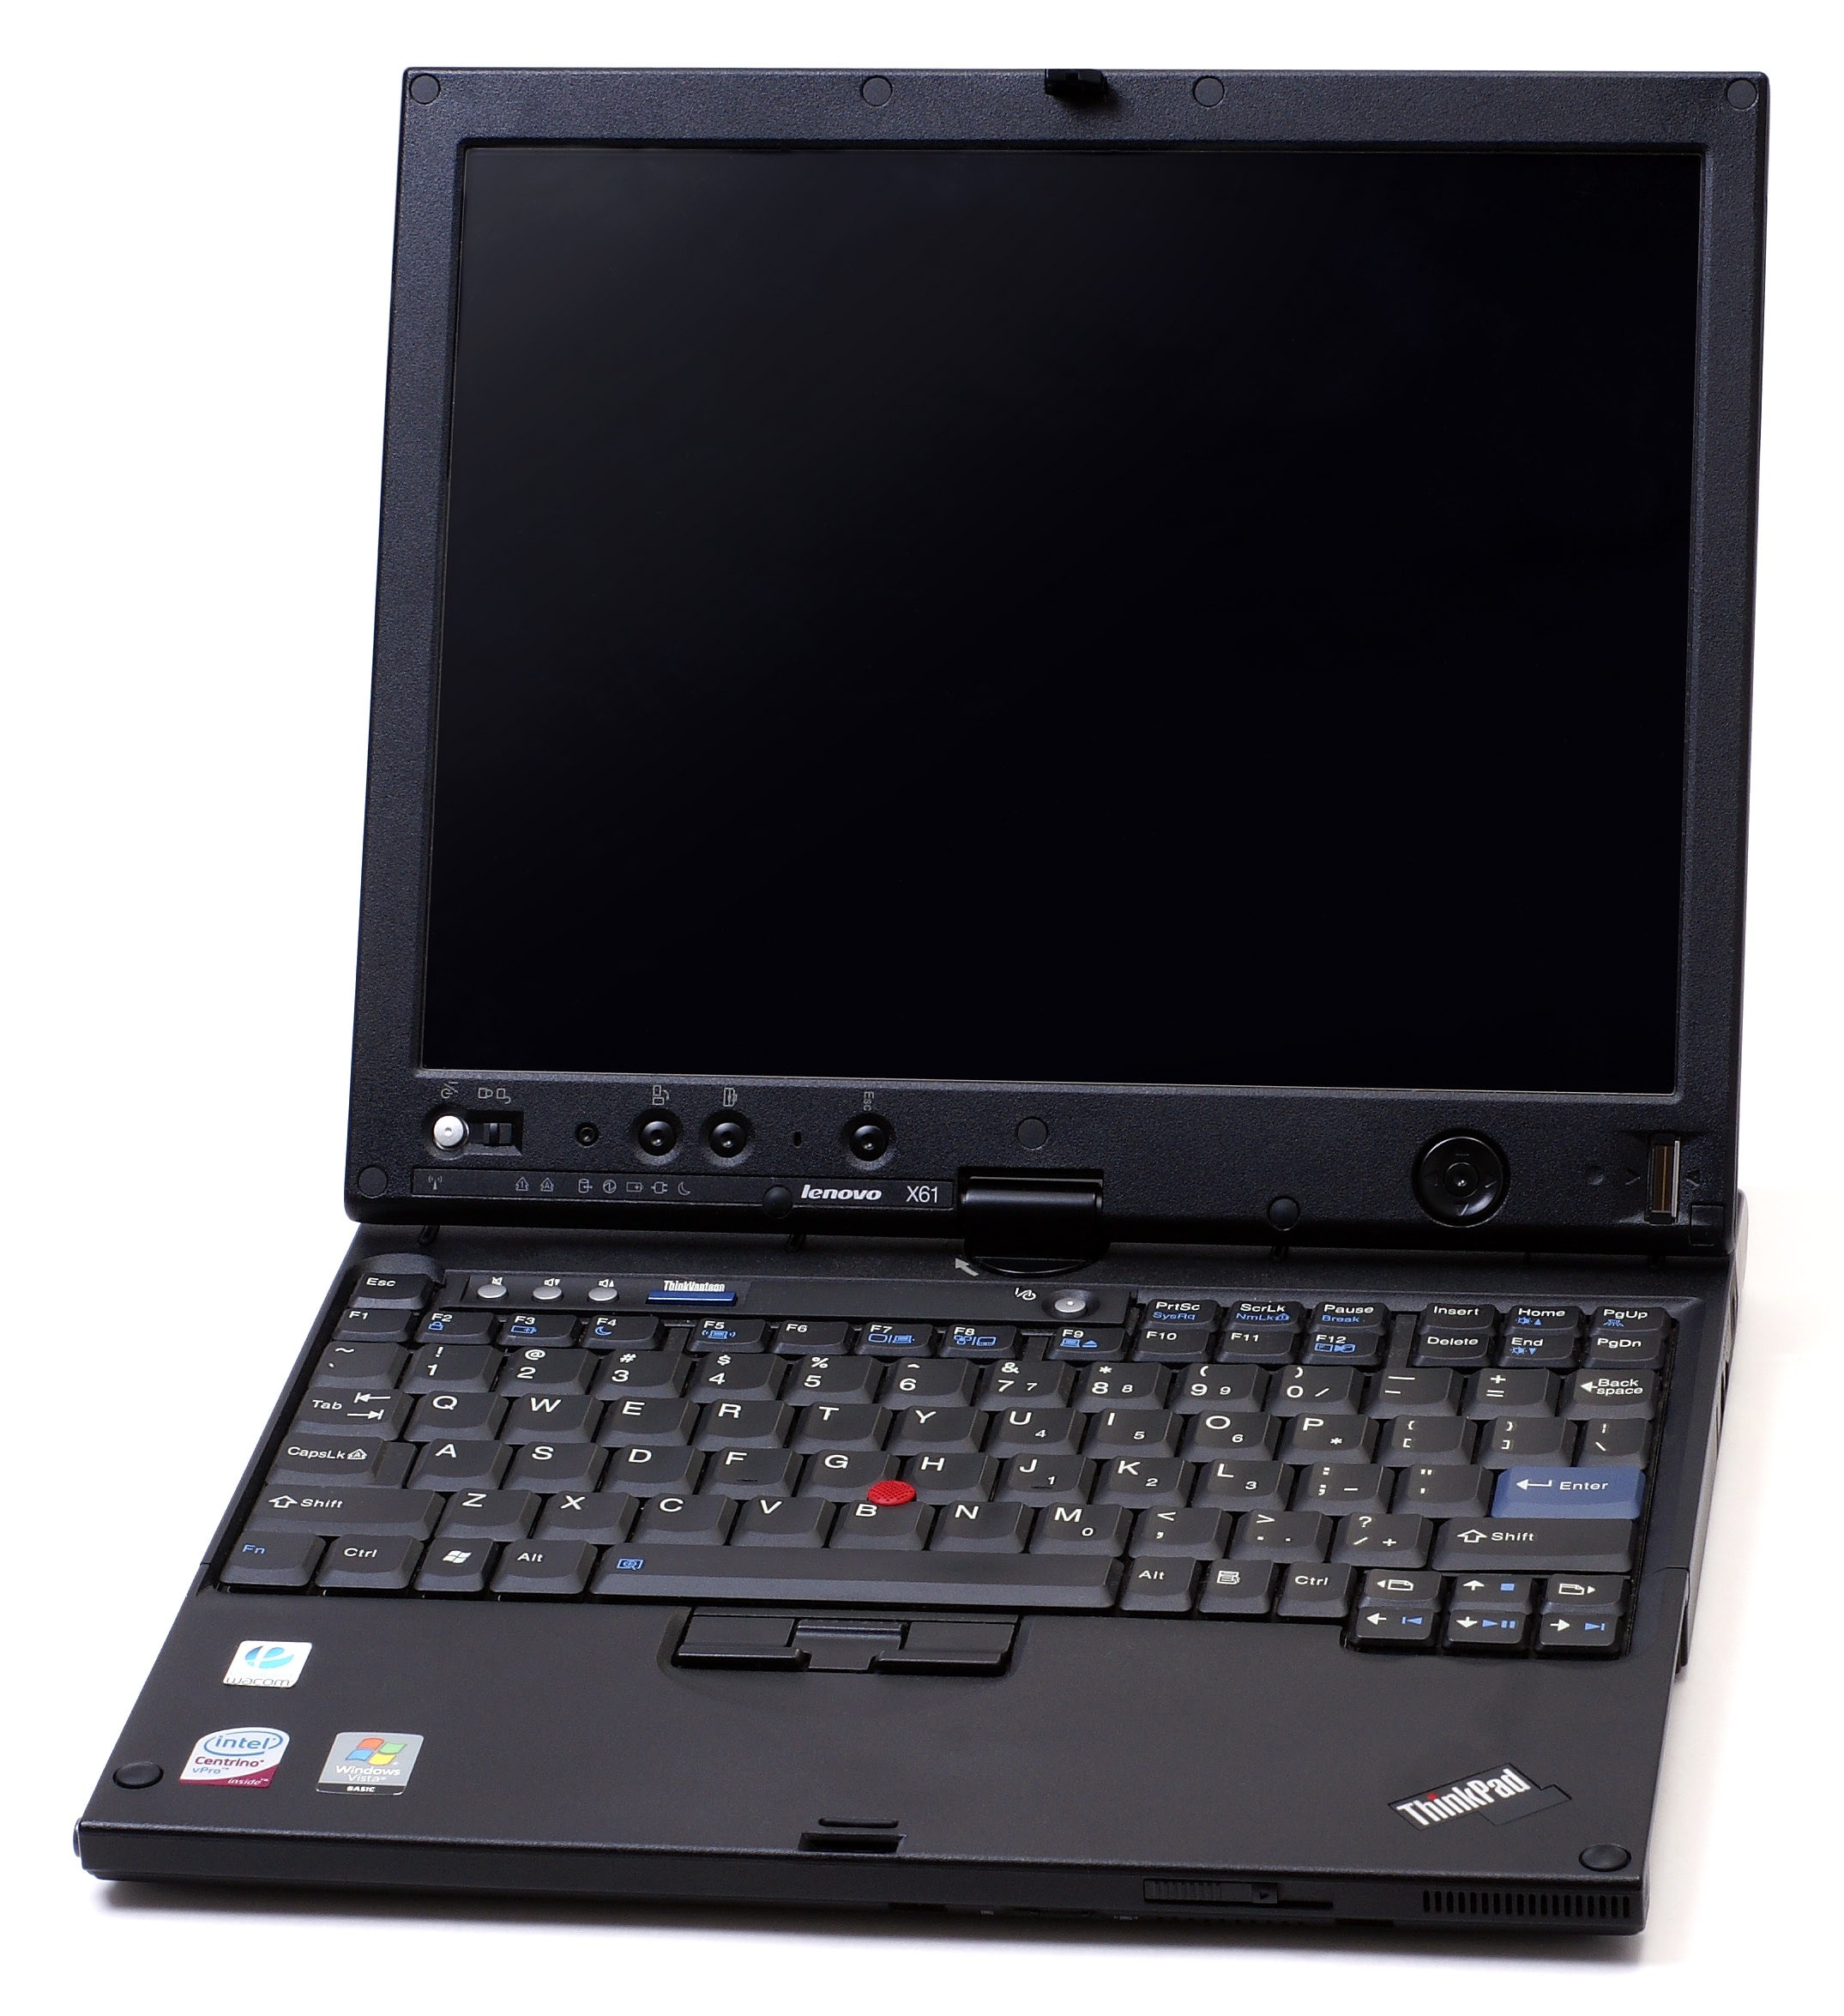 Lenovo Thinkpad X61 Tablet, Electronics, technology, music